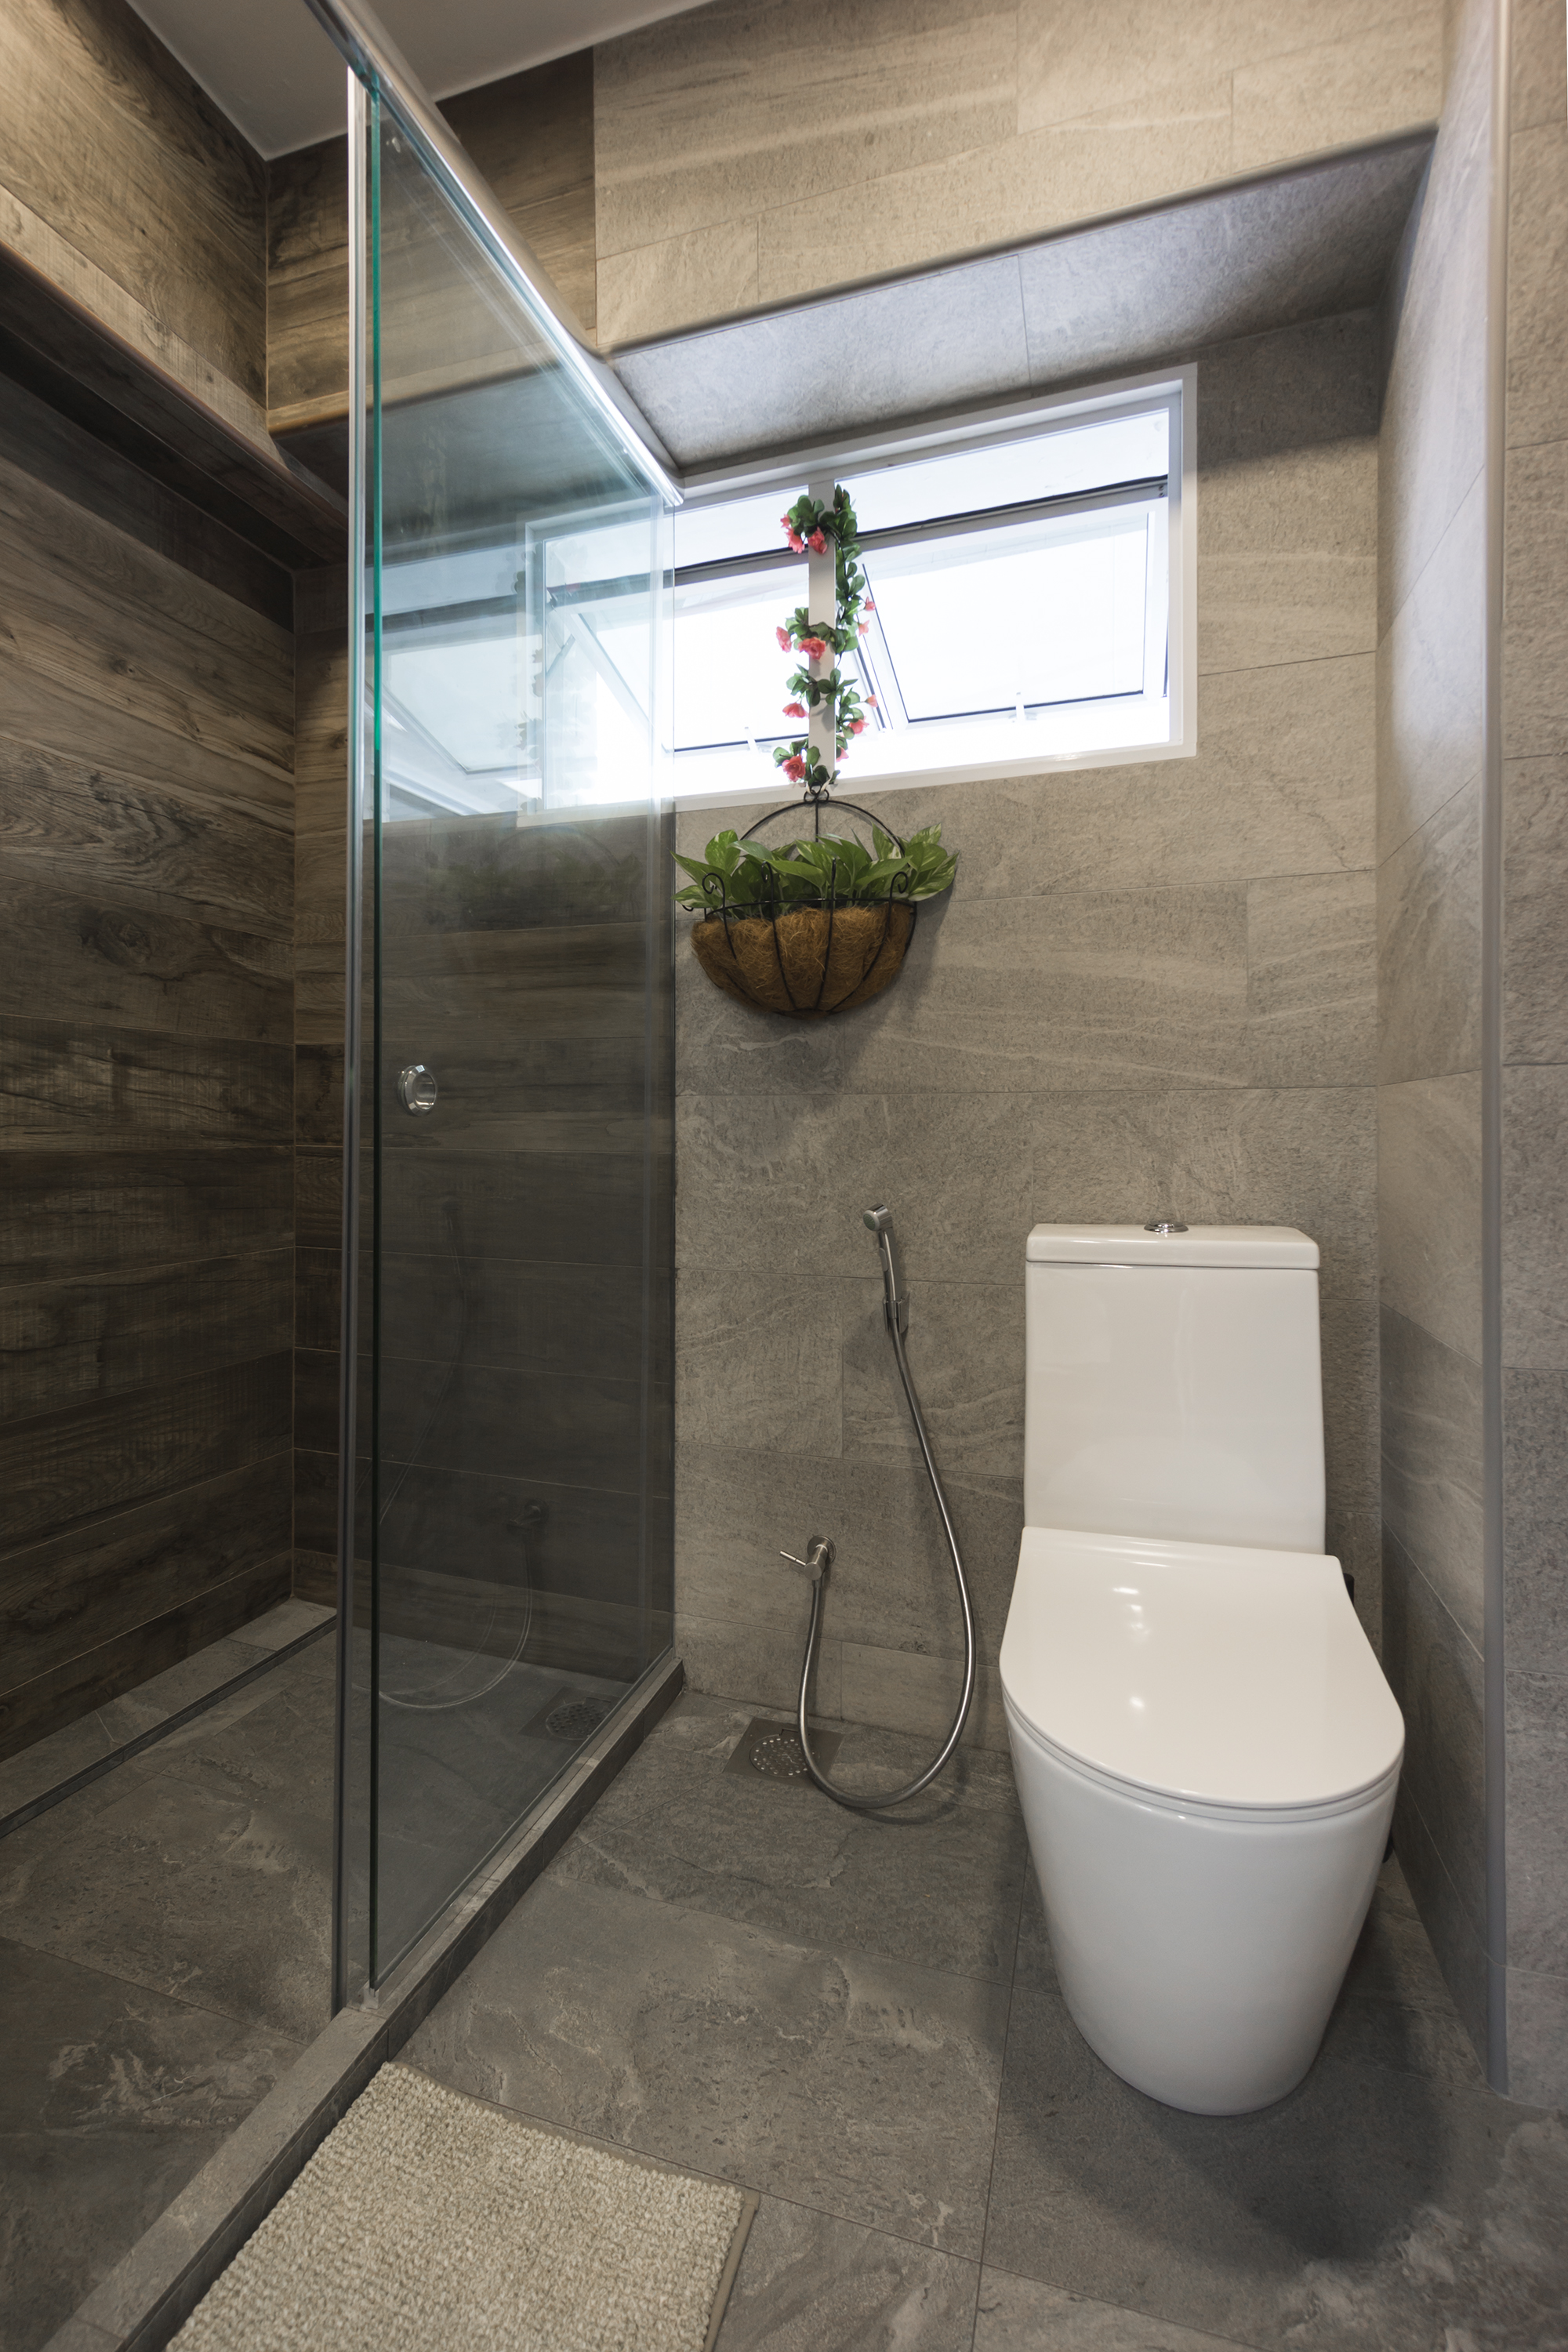 Country, Rustic Design - Bathroom - HDB 5 Room - Design by Flo Design Pte Ltd